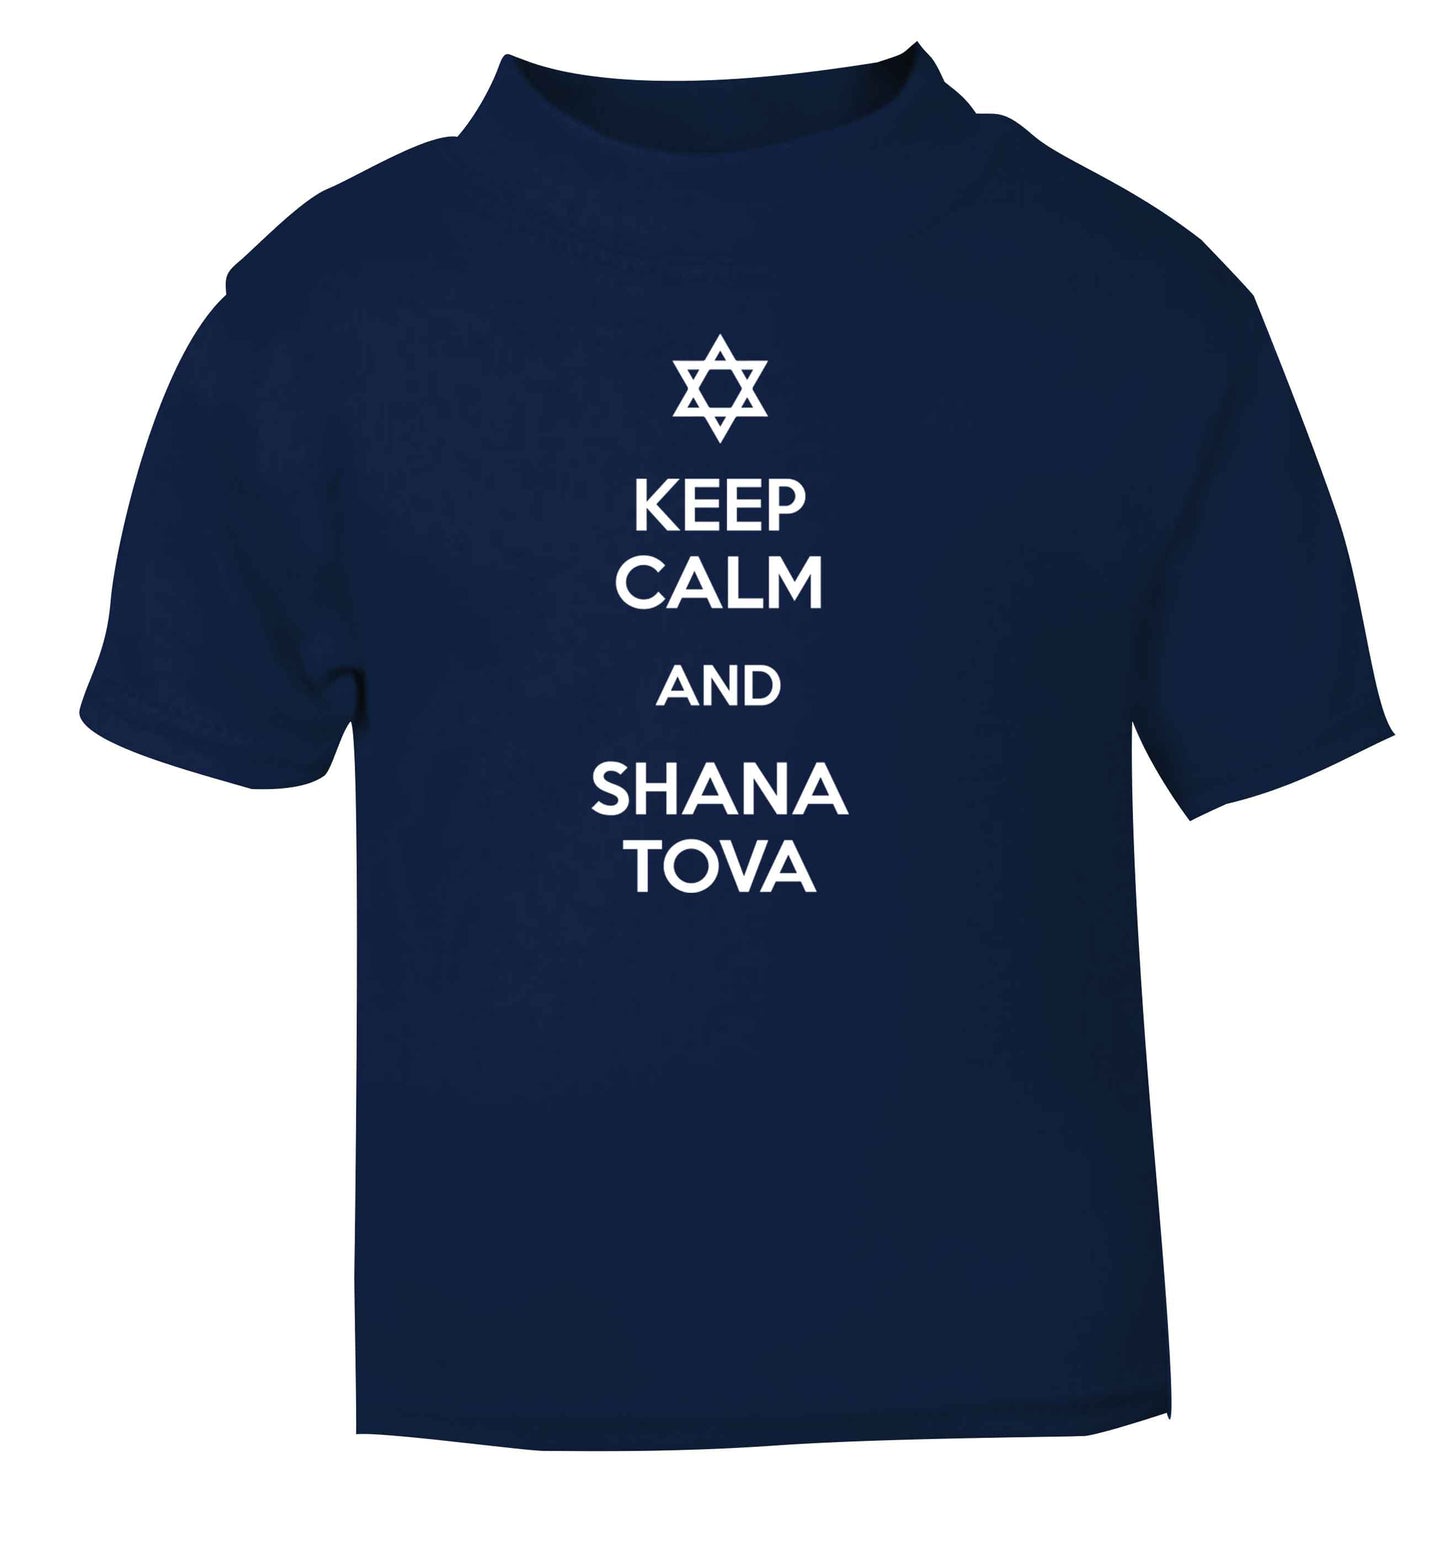 Keep calm and shana tova navy Baby Toddler Tshirt 2 Years